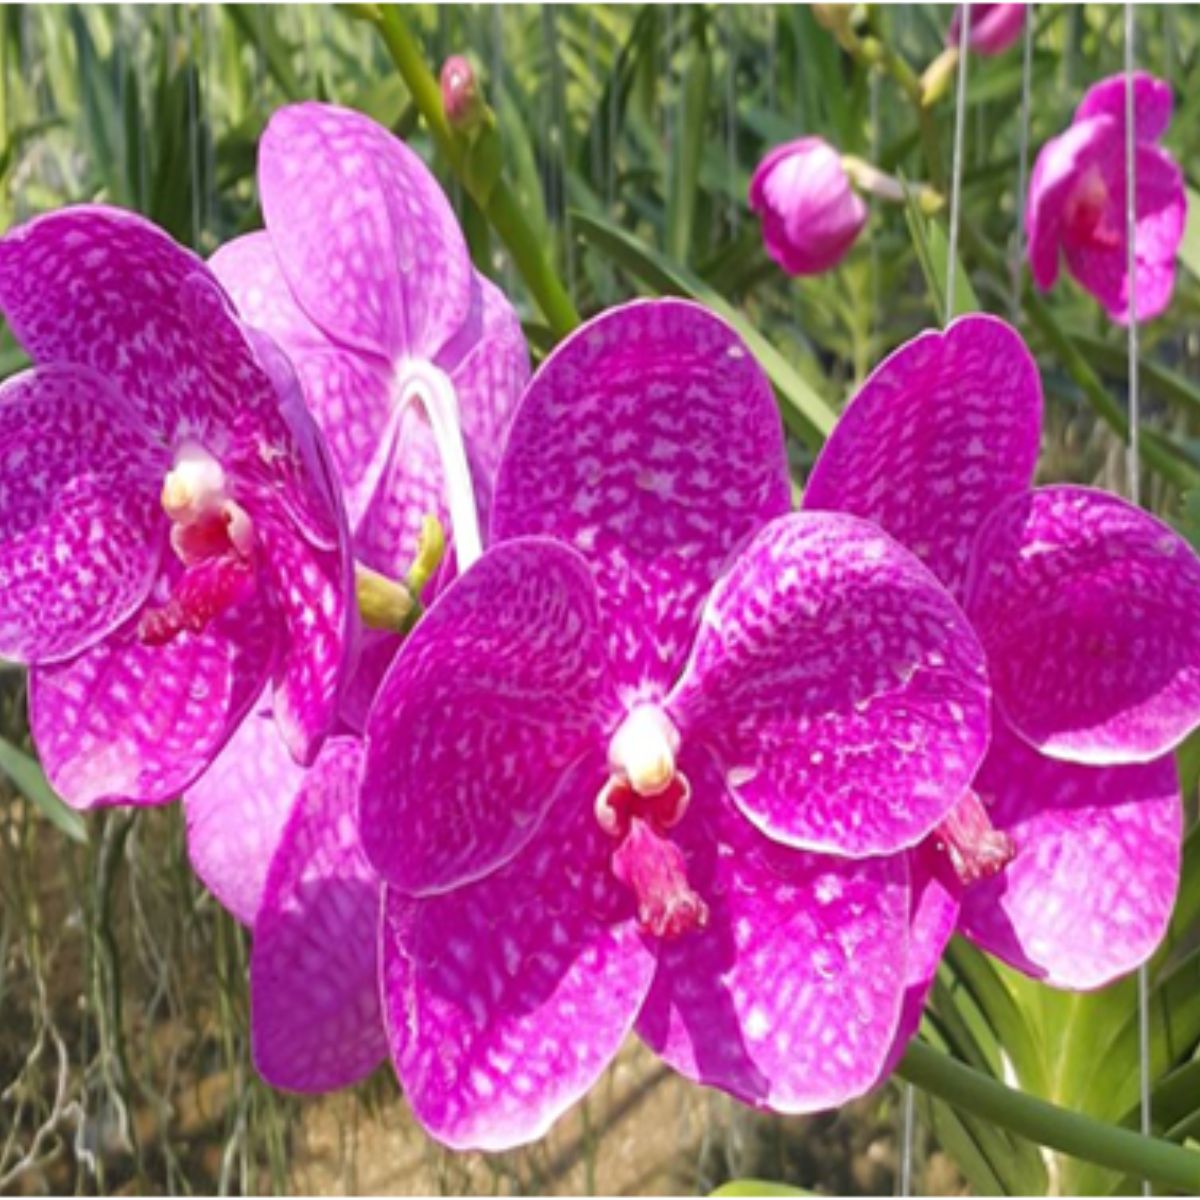 Vanda Siriporn Pink Var Jairak Pink Orchid Flower - Delicate Pink Blooms in Full Blossom, A Stunning Floral Display